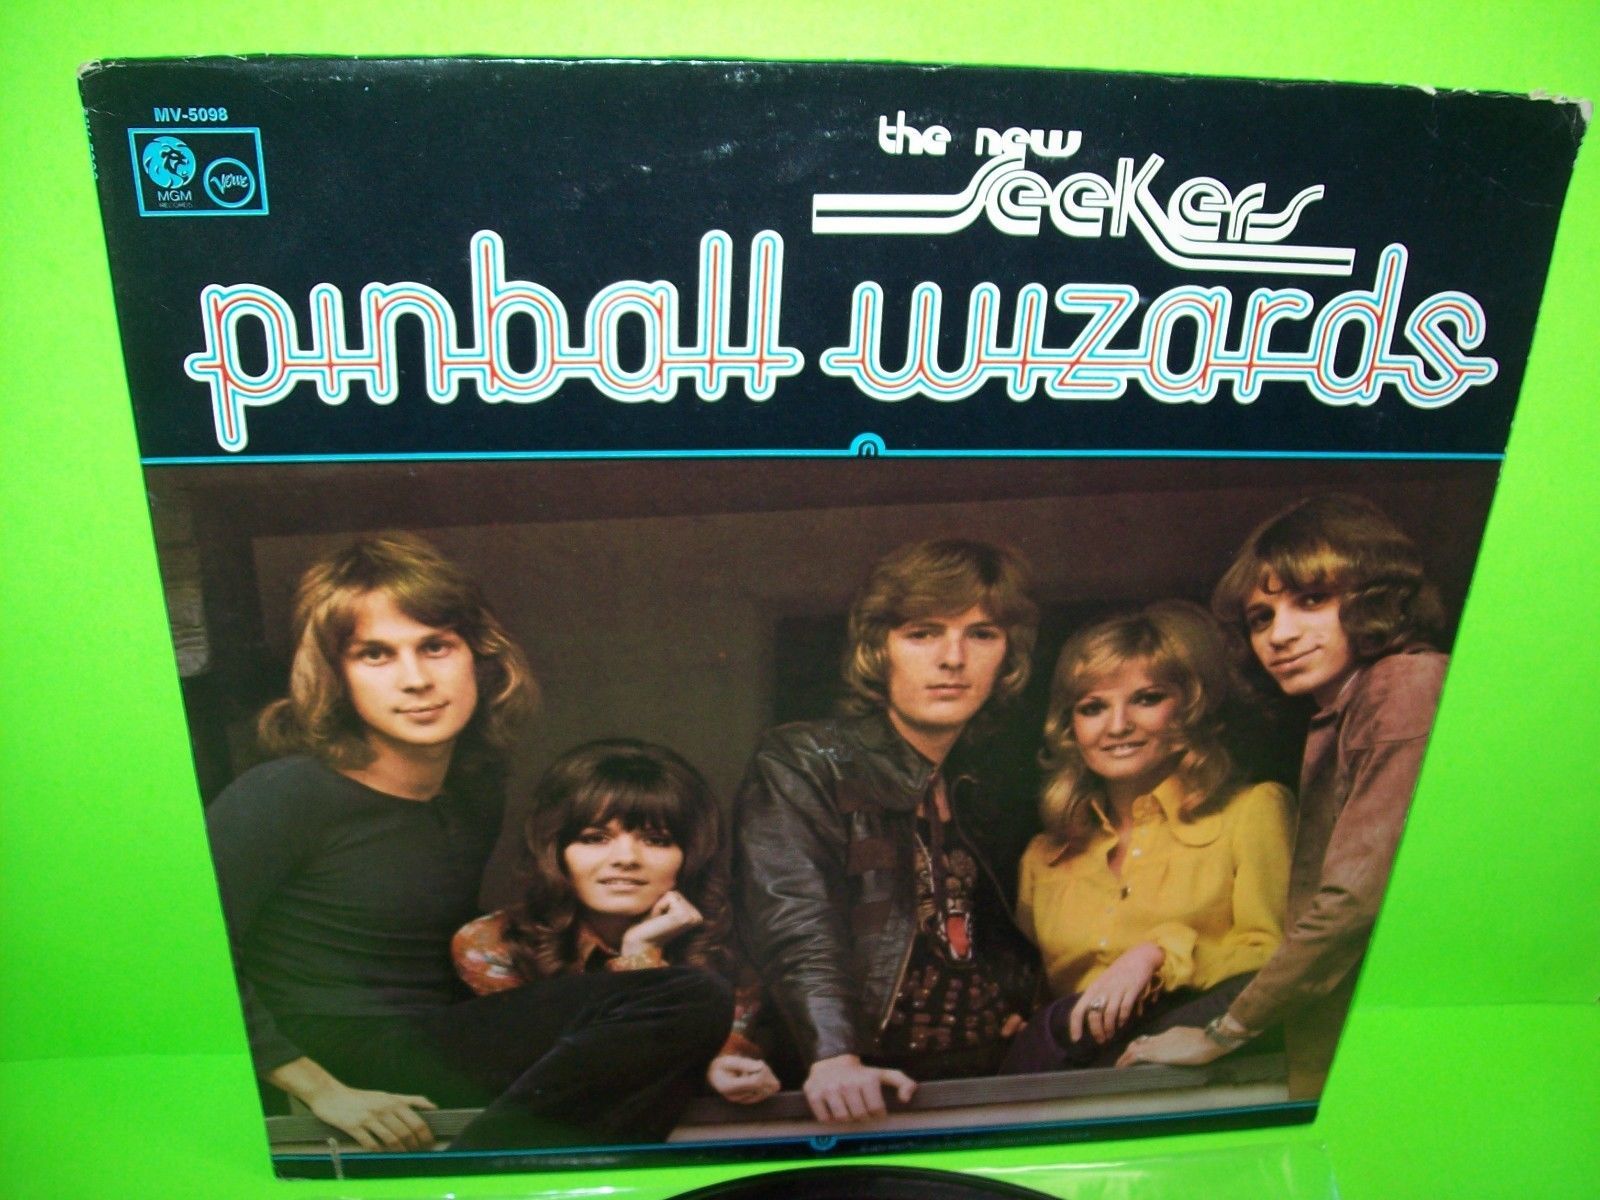 who wrote pinball wizard